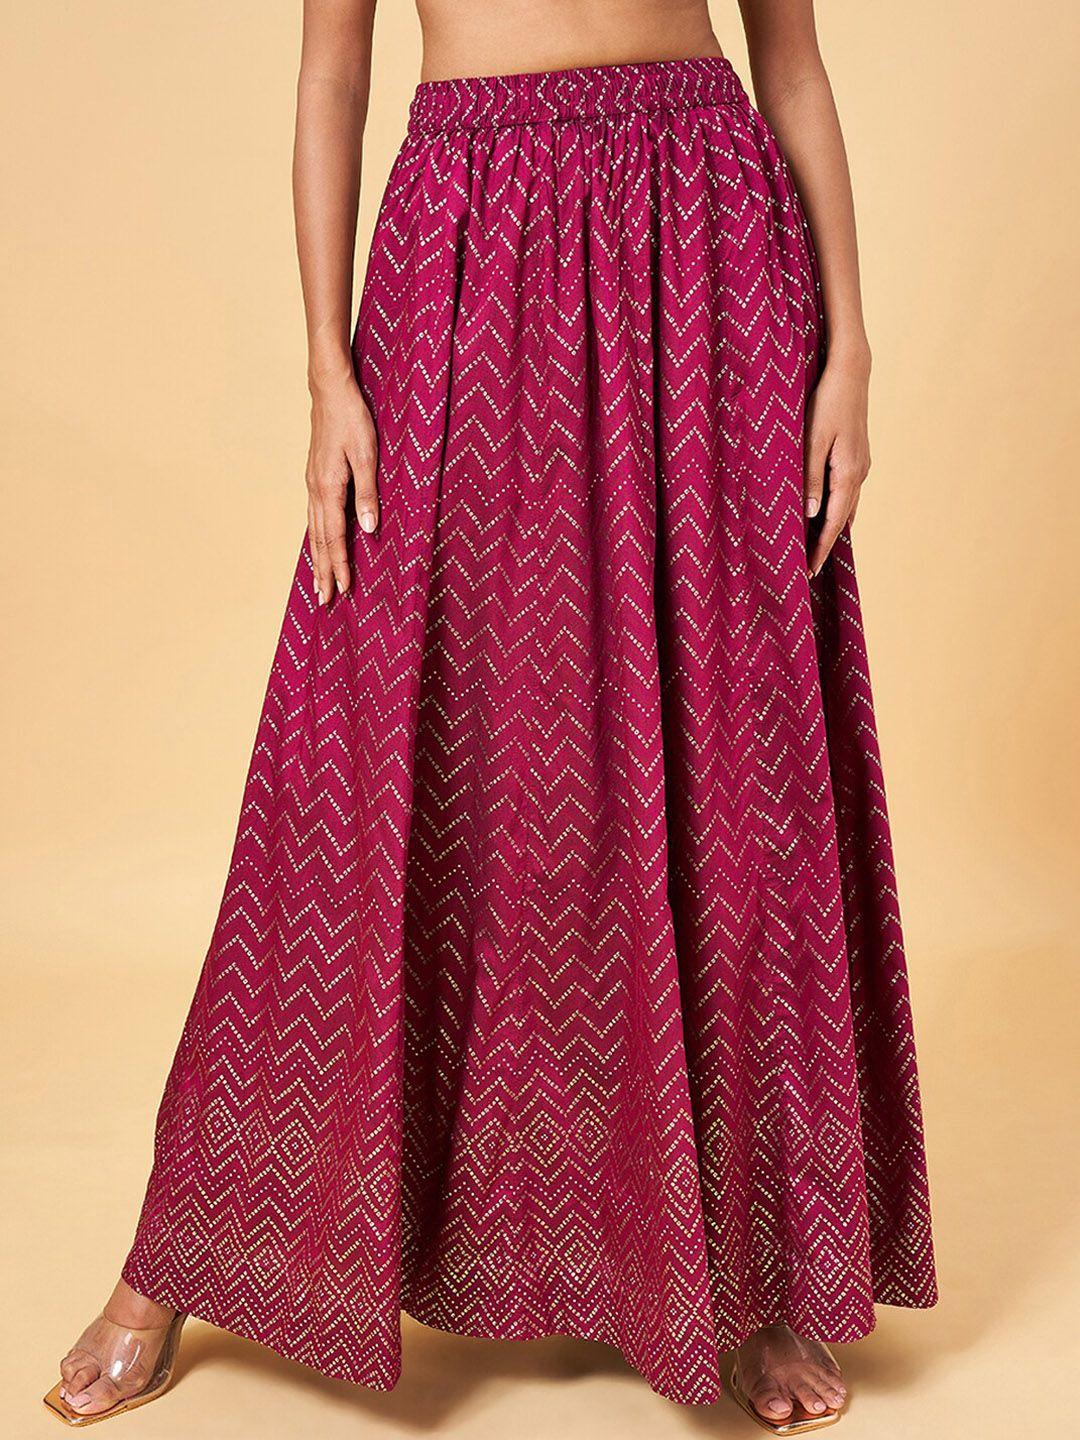 rangmanch by pantaloons ethnic motifs printed flared skirt